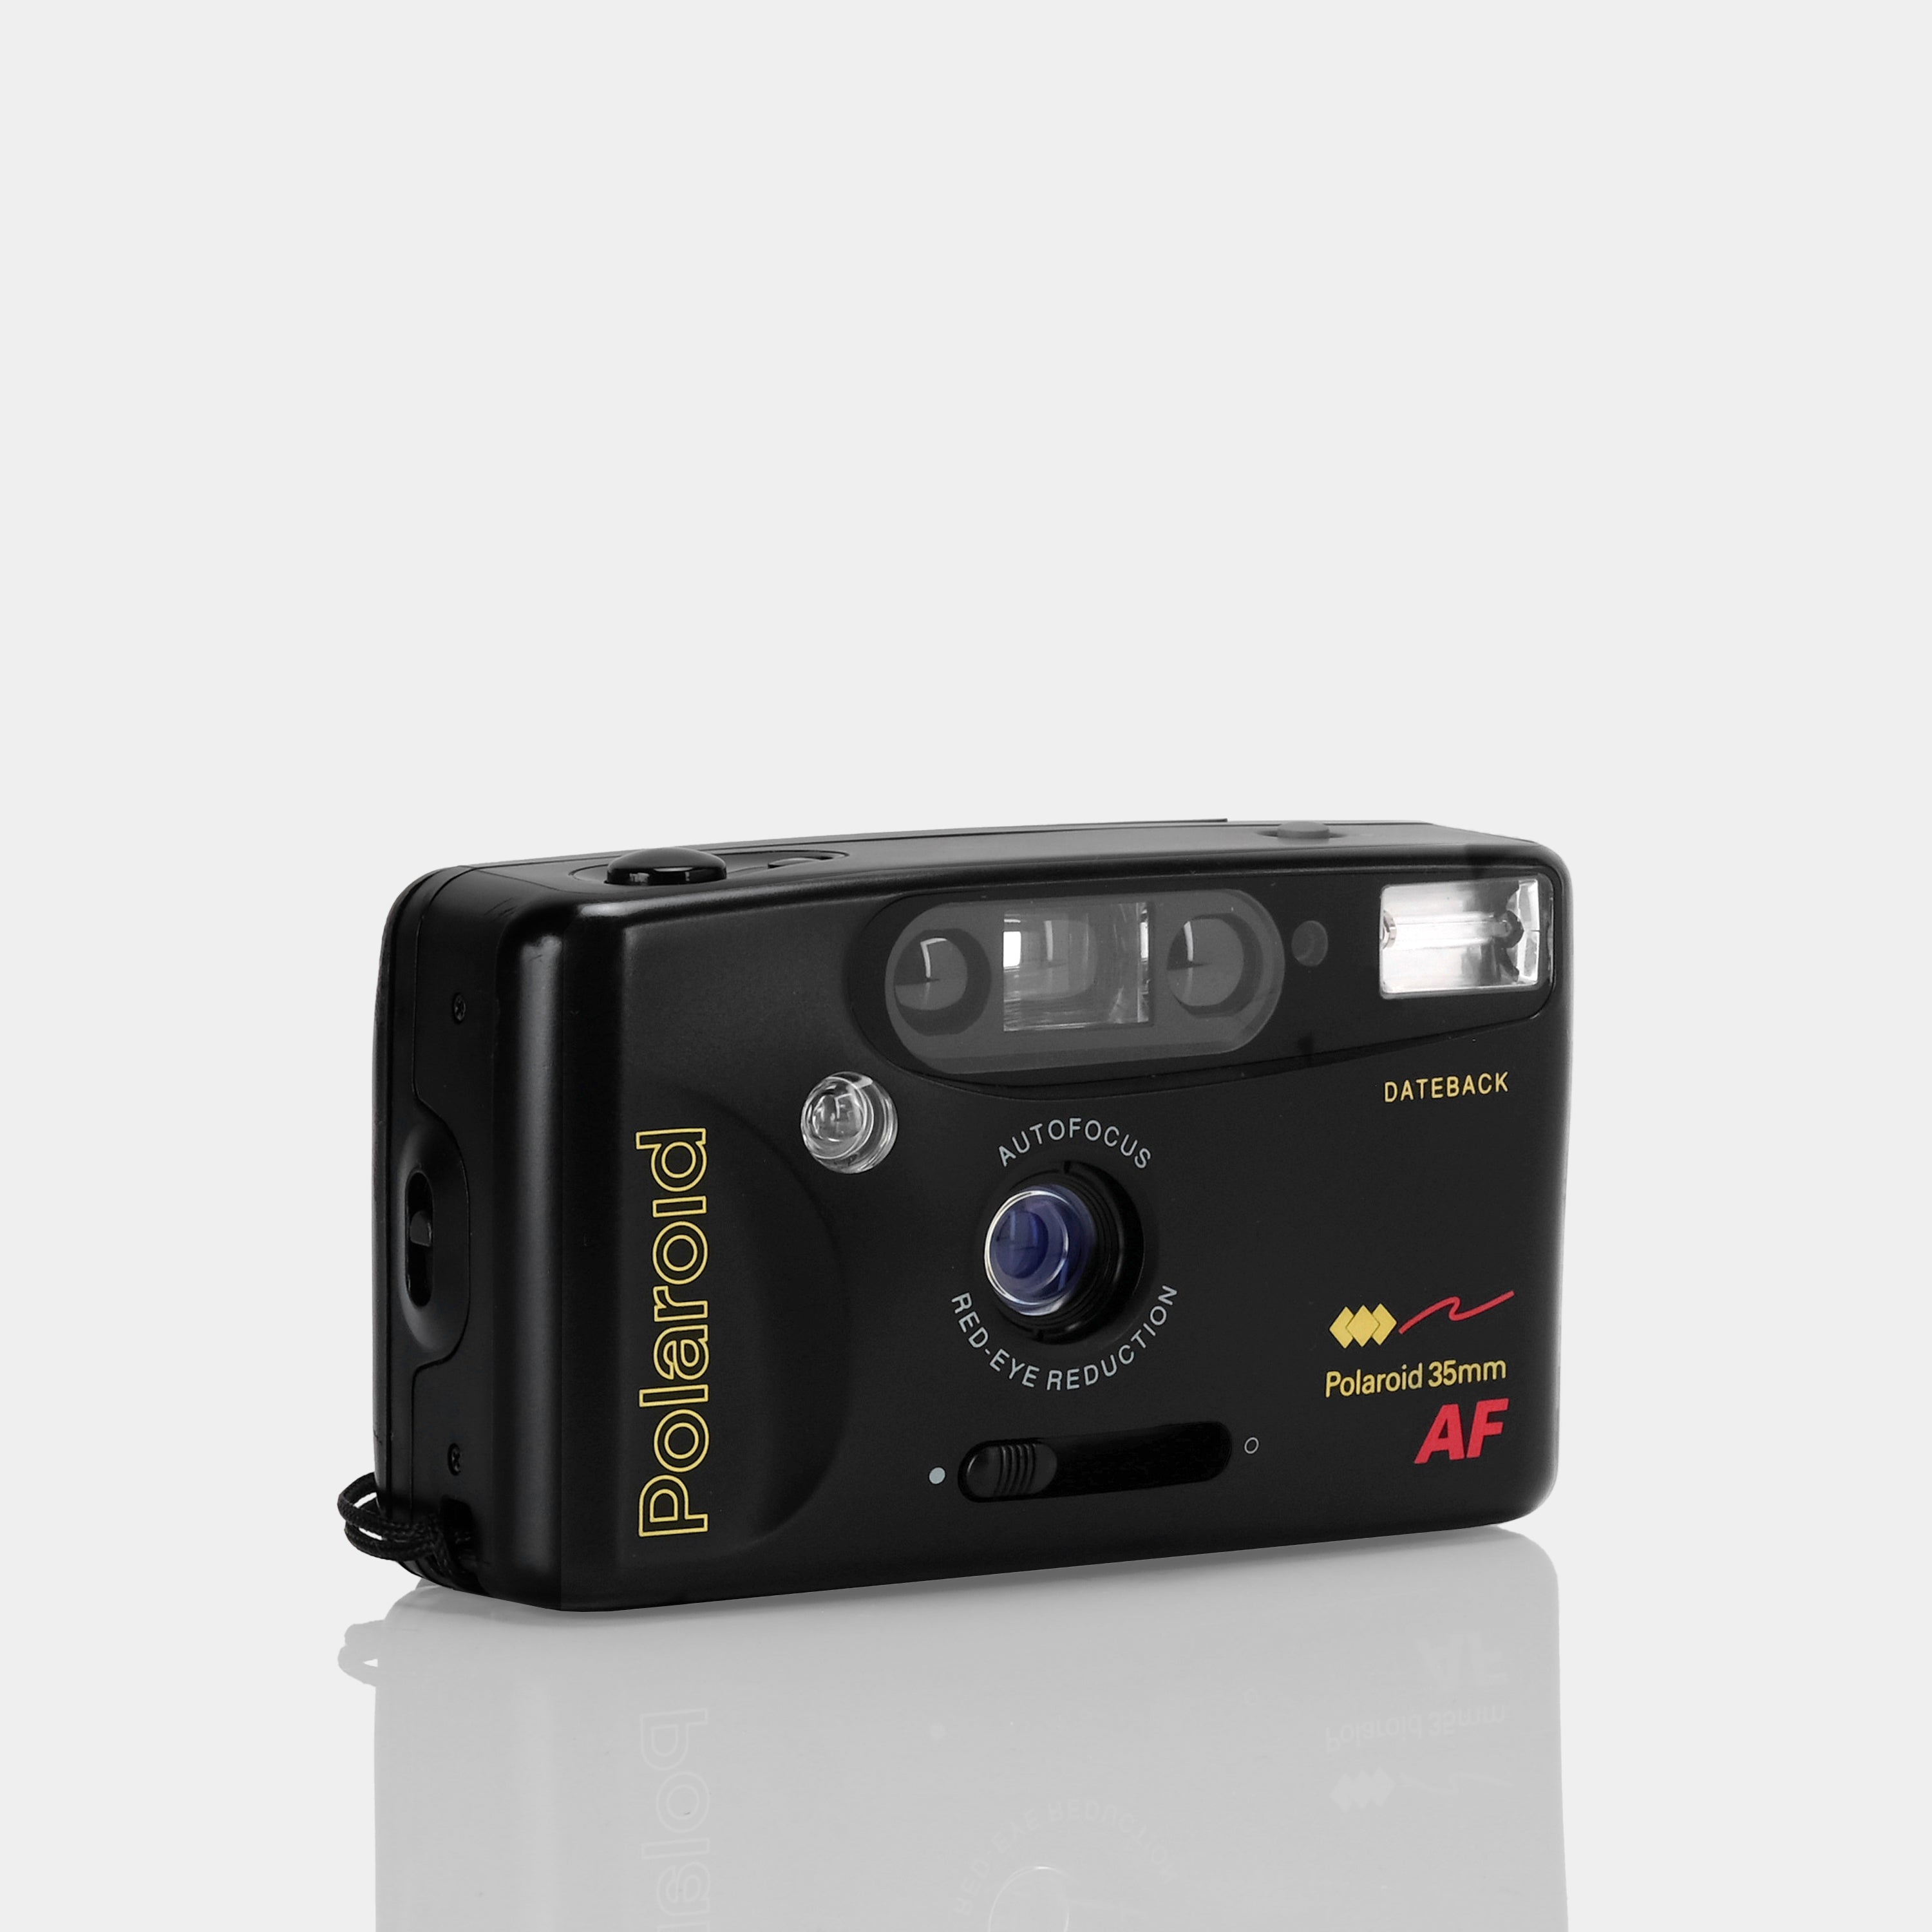 Polaroid 35mm AF Dateback 35mm Point and Shoot Film Camera